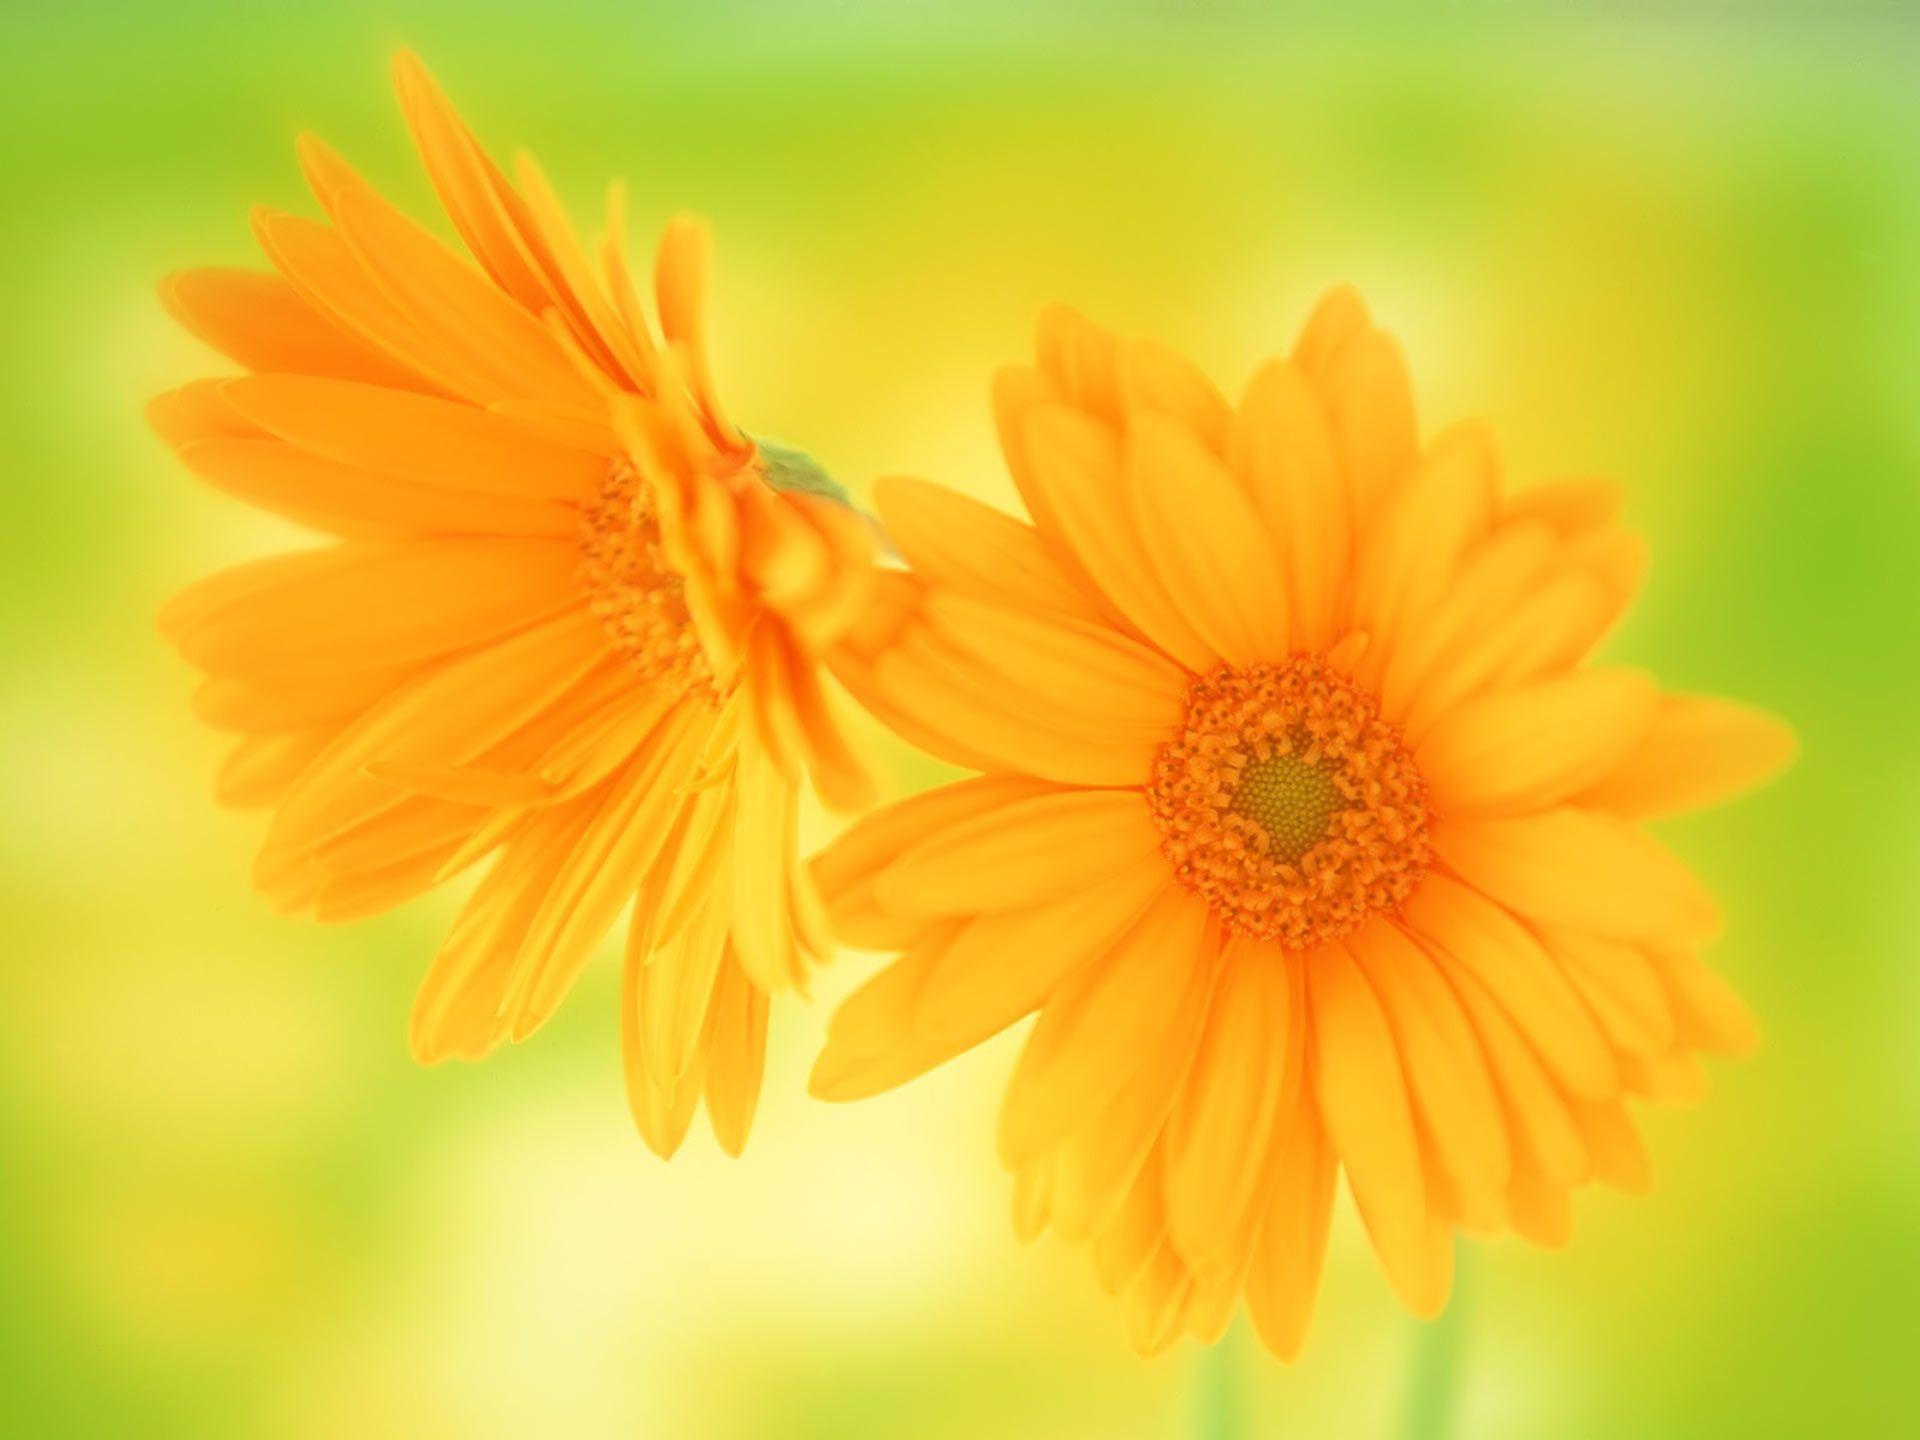 Desktop Wallpapers · Gallery · Windows 7 · Yellow flowers pictures